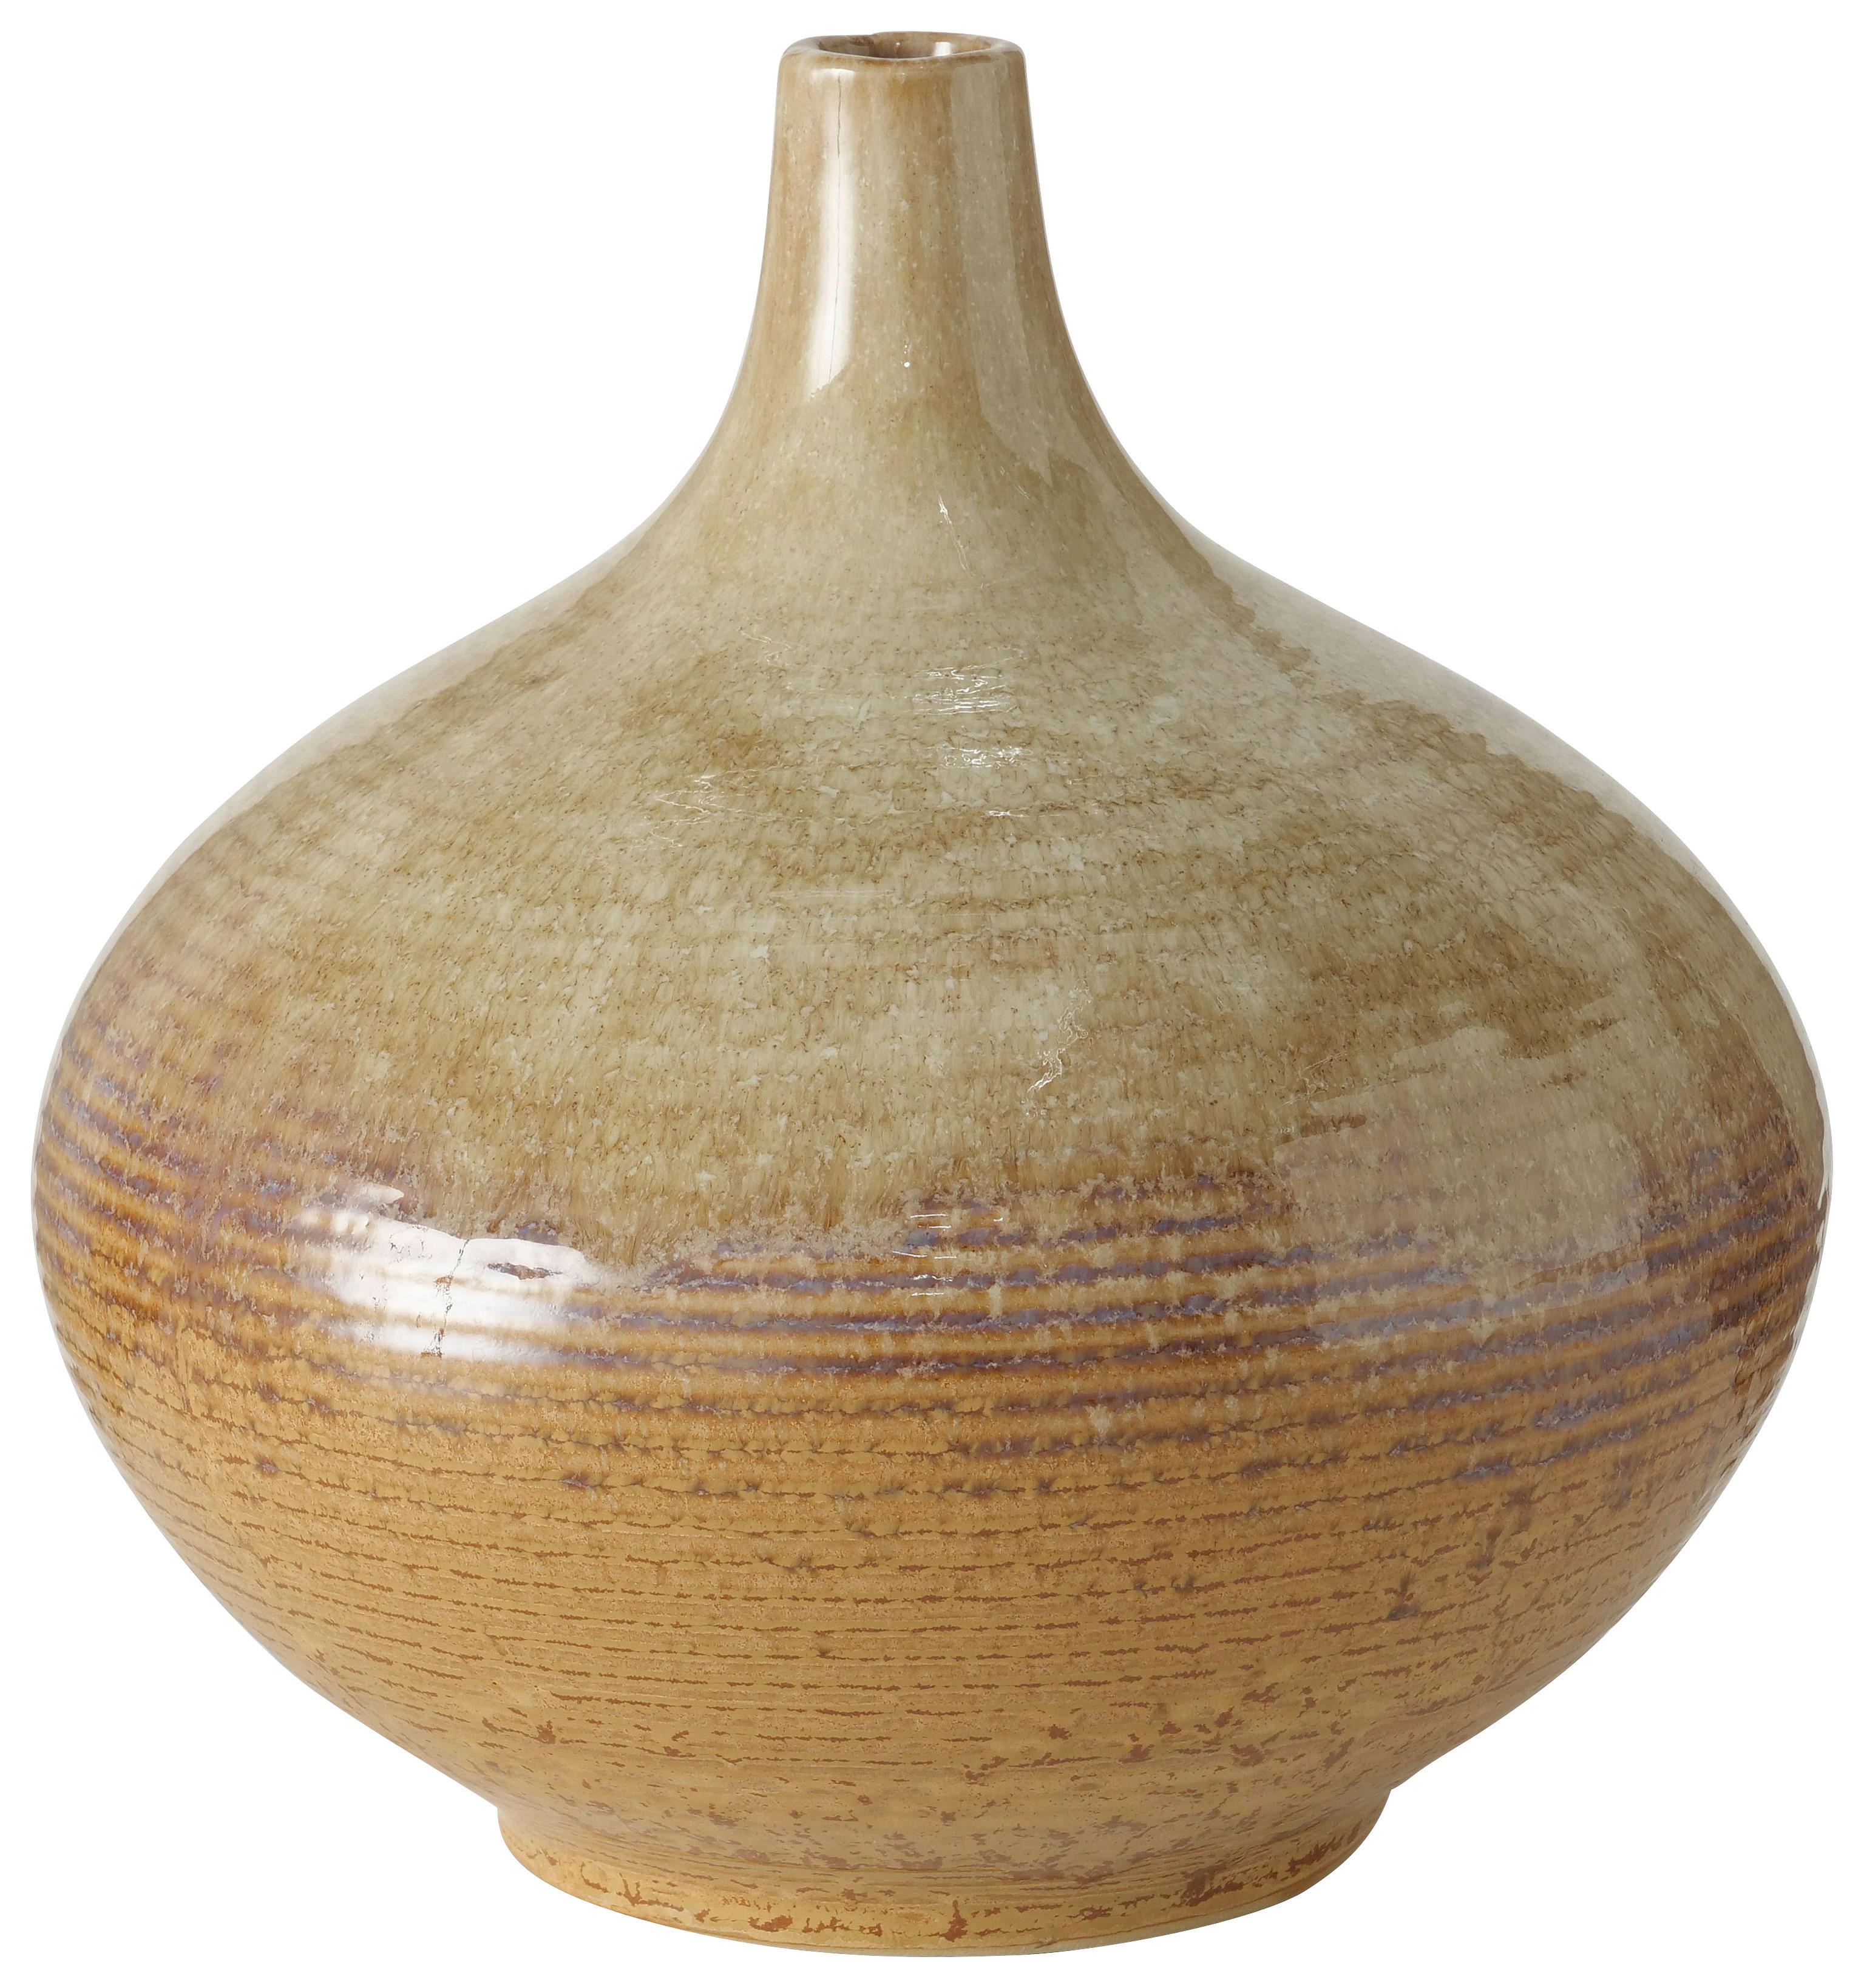 VASE 21 cm  - Hellbraun, Natur, Keramik (20/21cm)